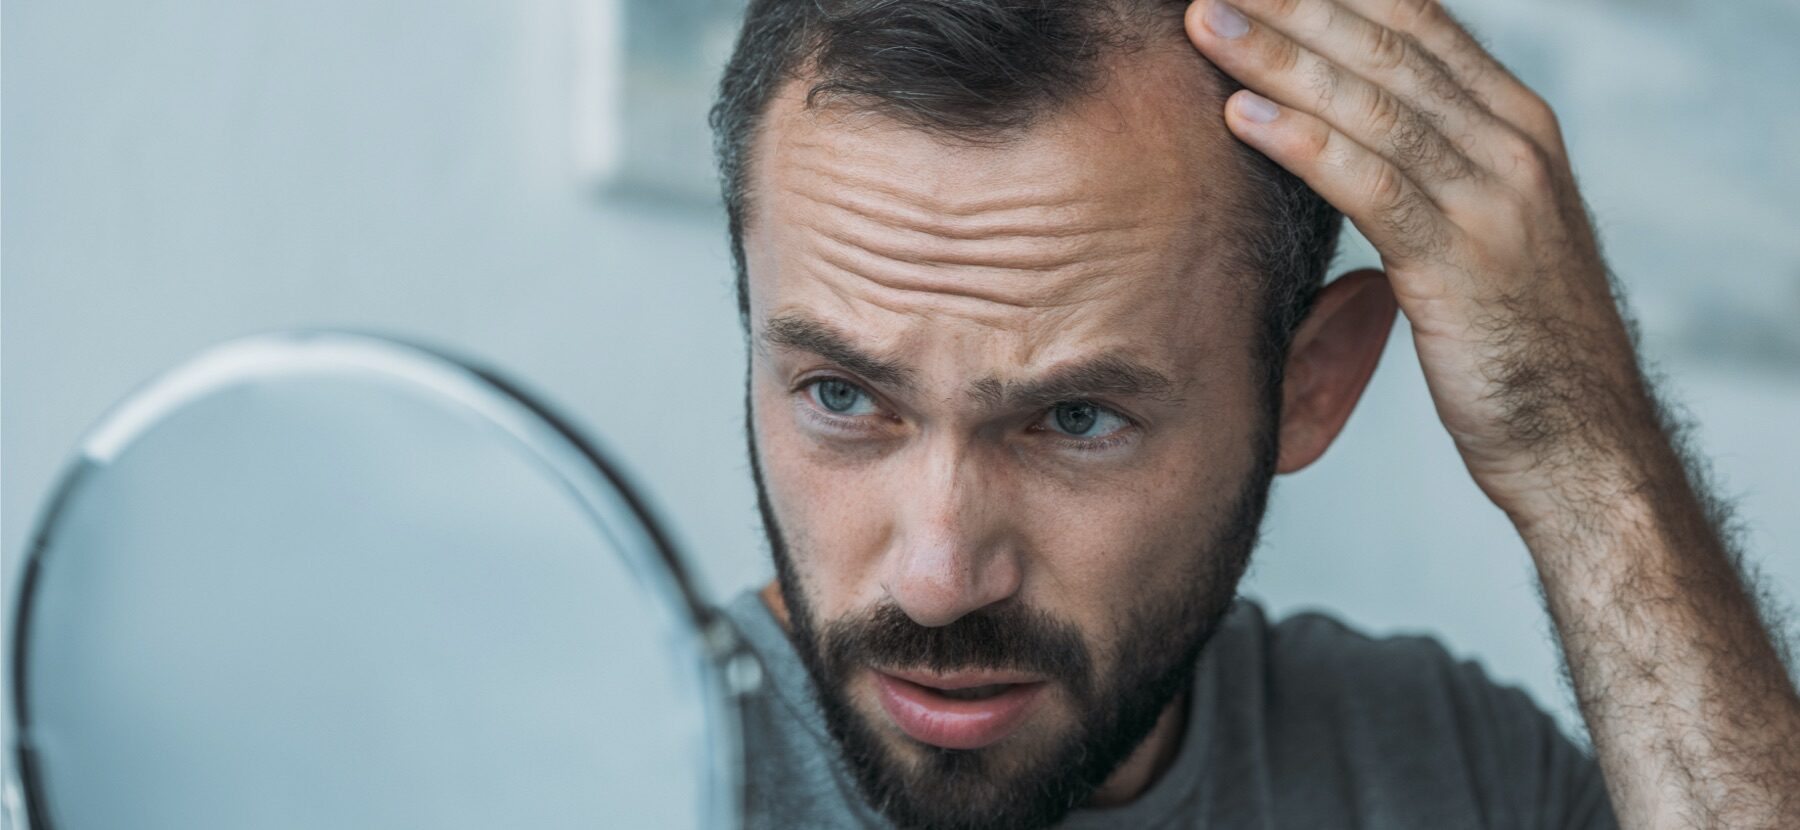 Haarausfall: Mann untersucht seinen Haaransatz